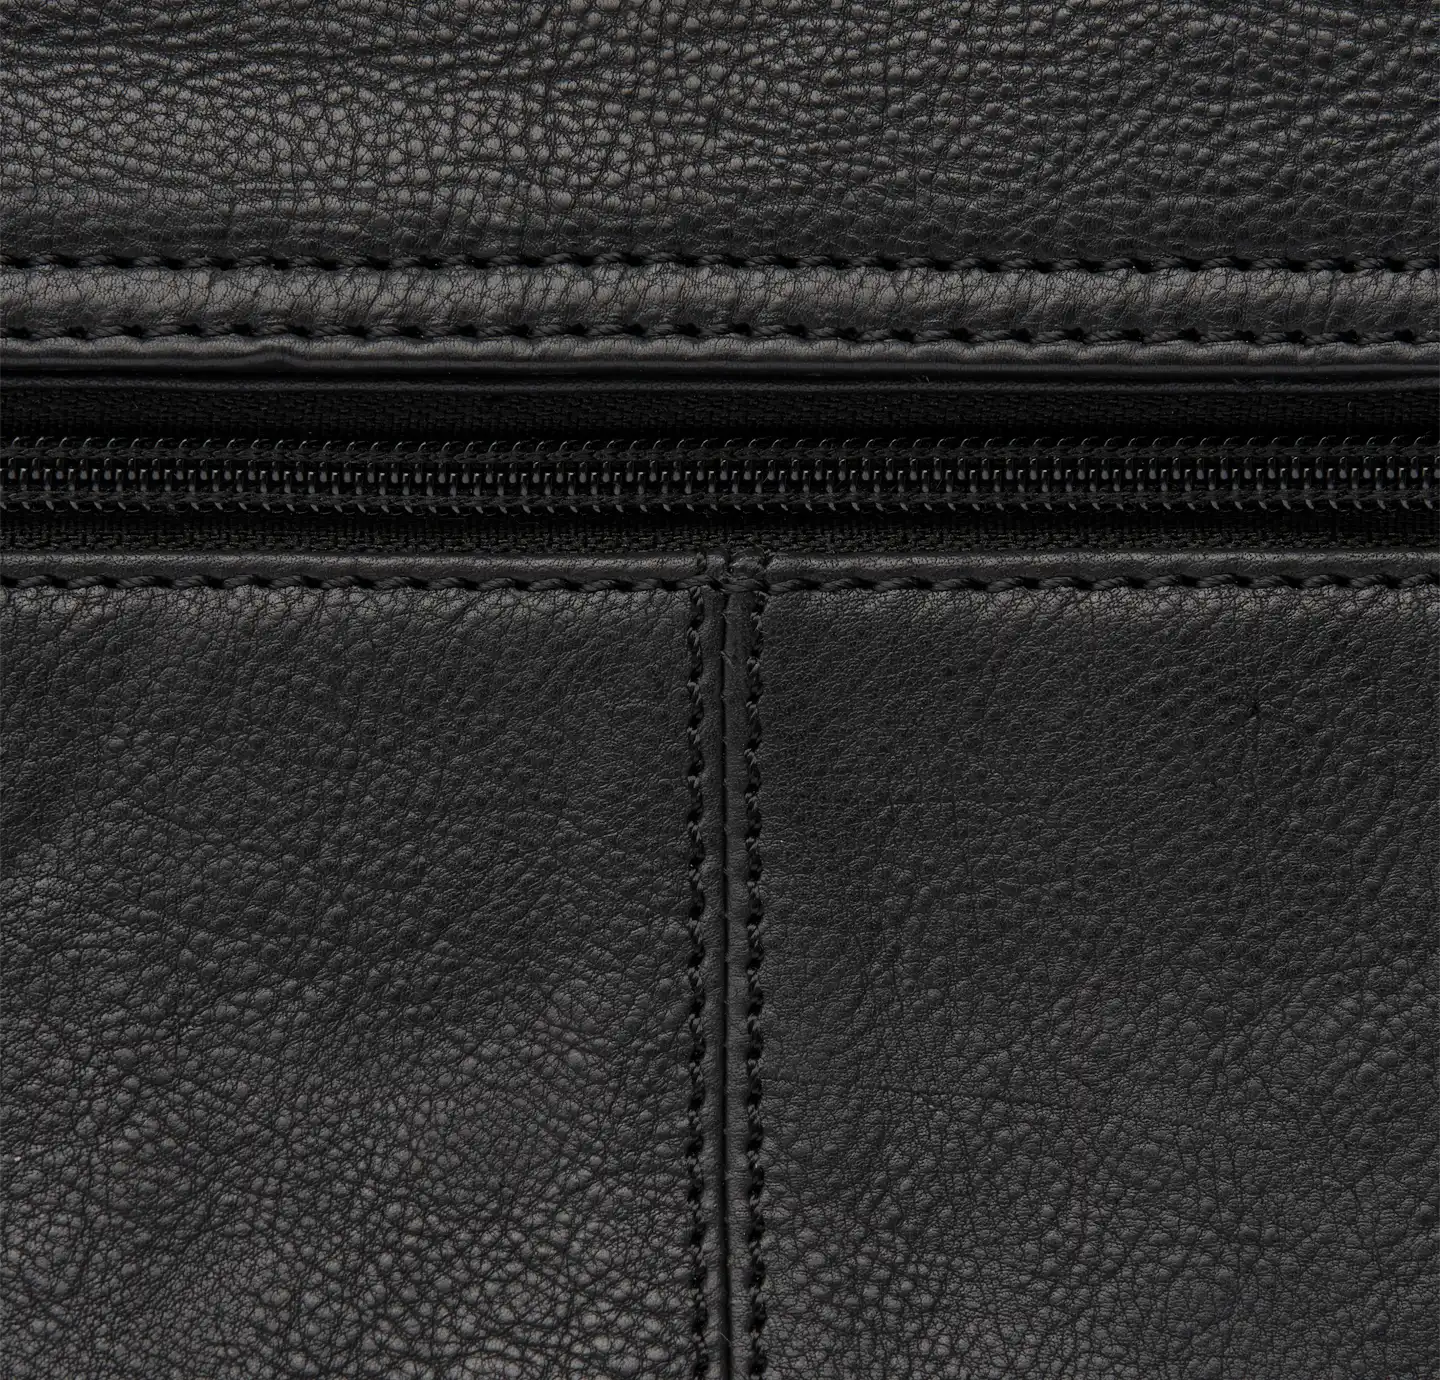 California - Stilren computertaske i sort læder